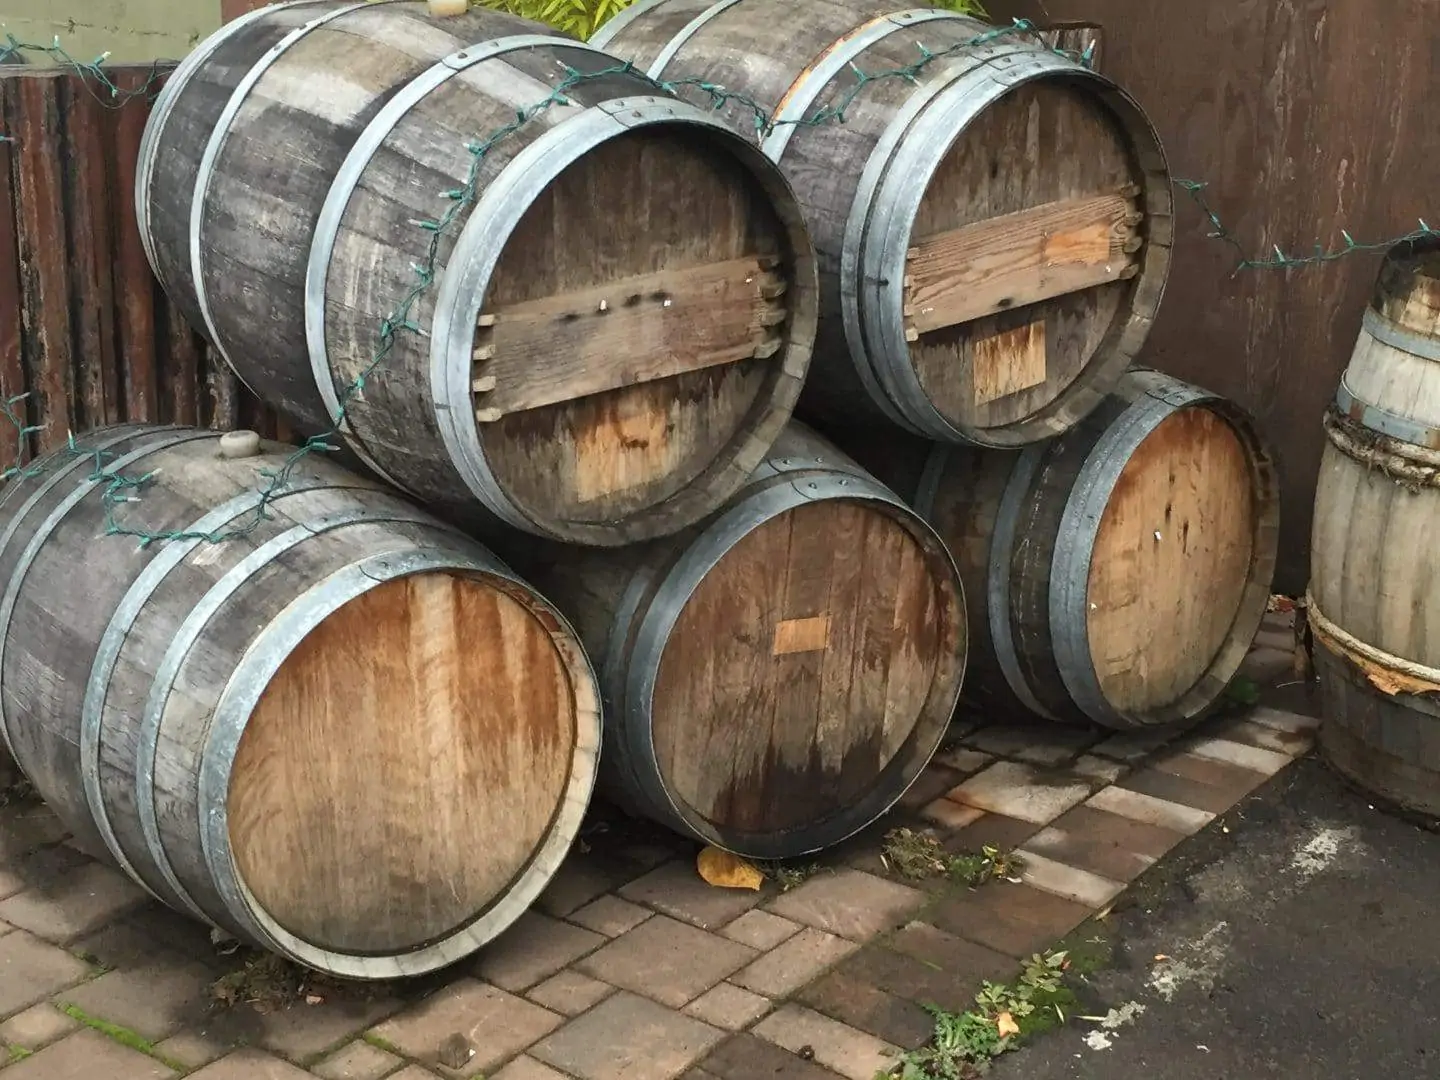 California wine barrels